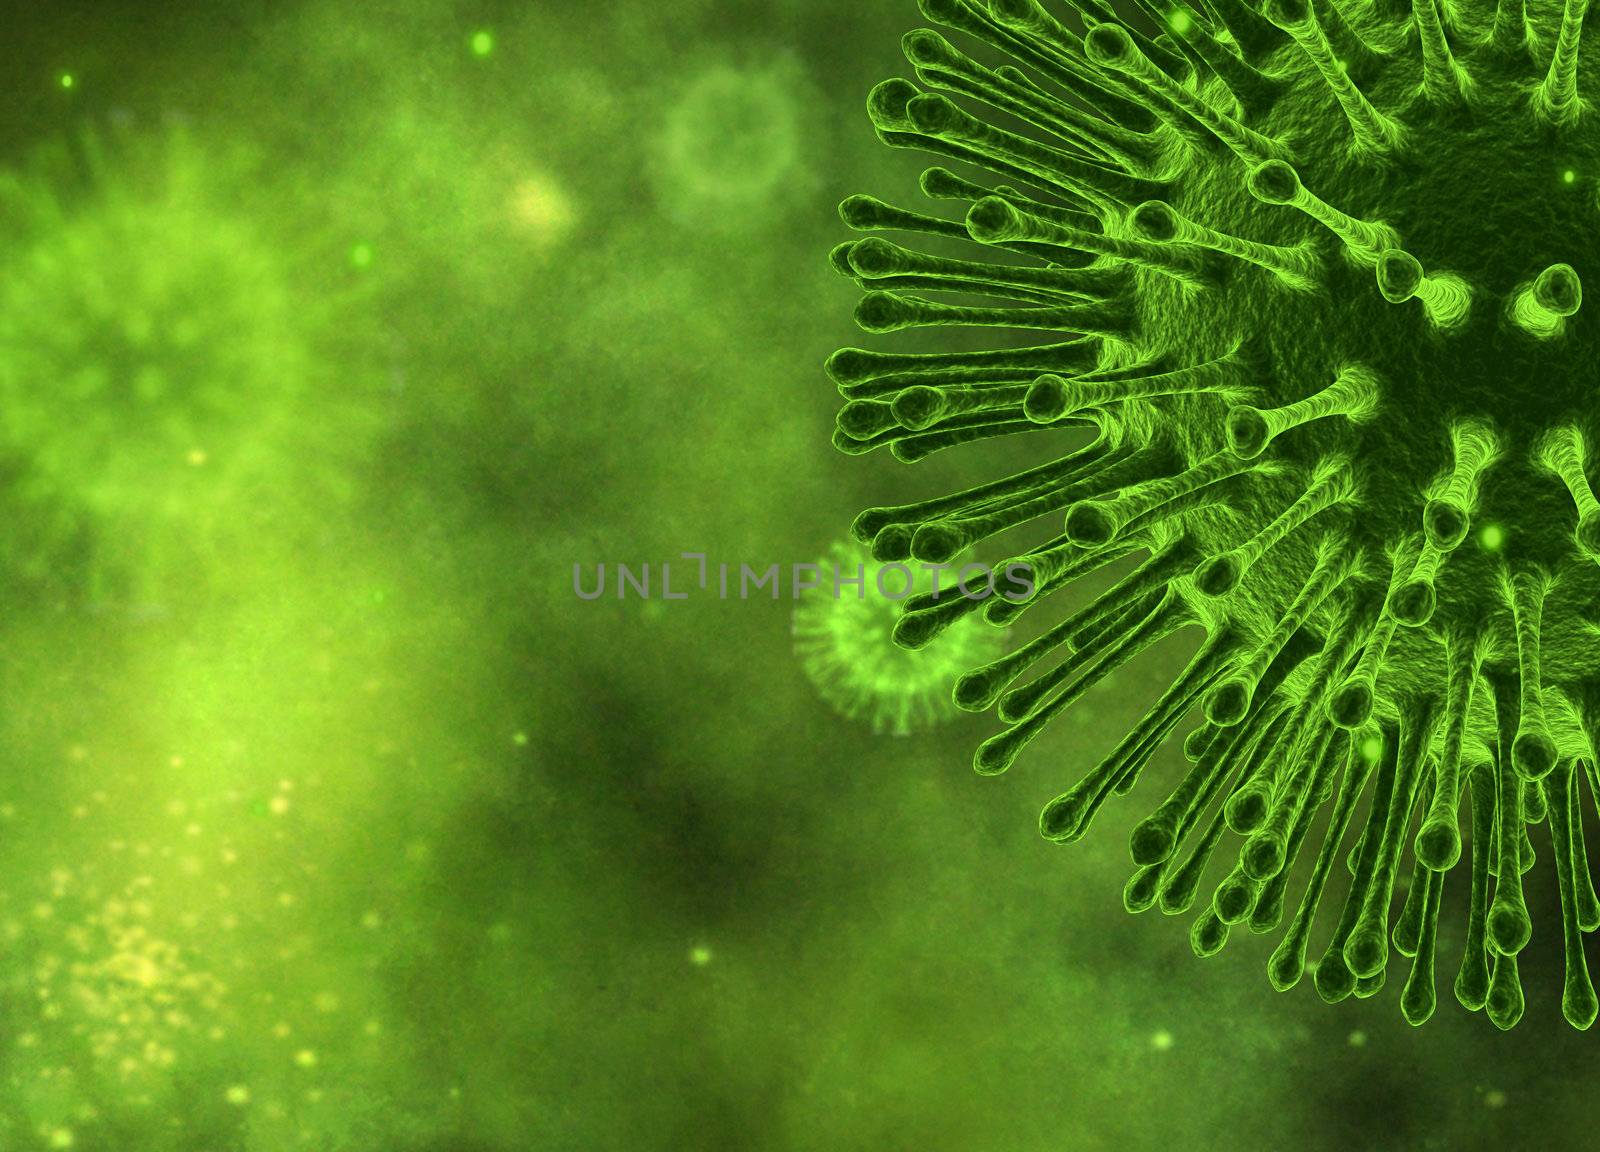 Virus closeup by woodoo